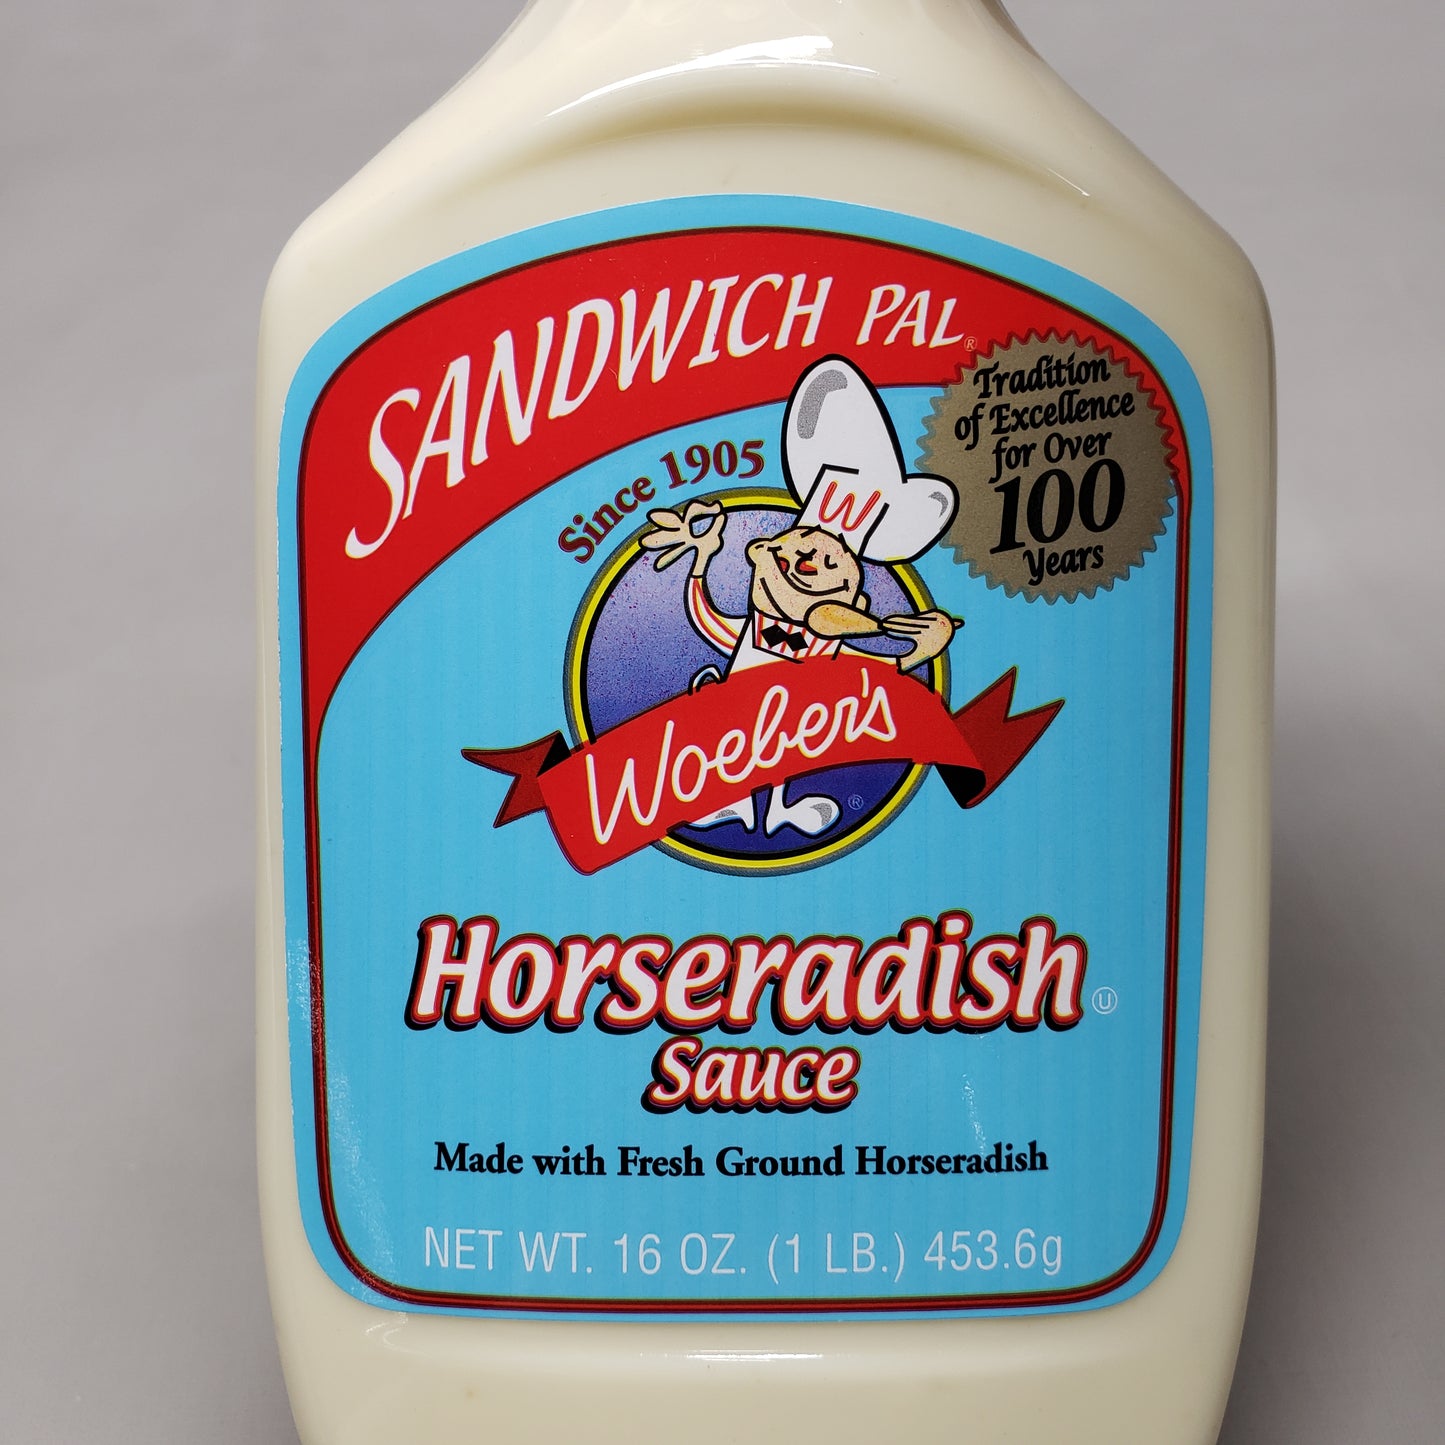 ZA@ WOEBER'S Mustard MFG Co. 6PK of Sandwich Pal Horseradish Sauce 6/16 oz 10/23